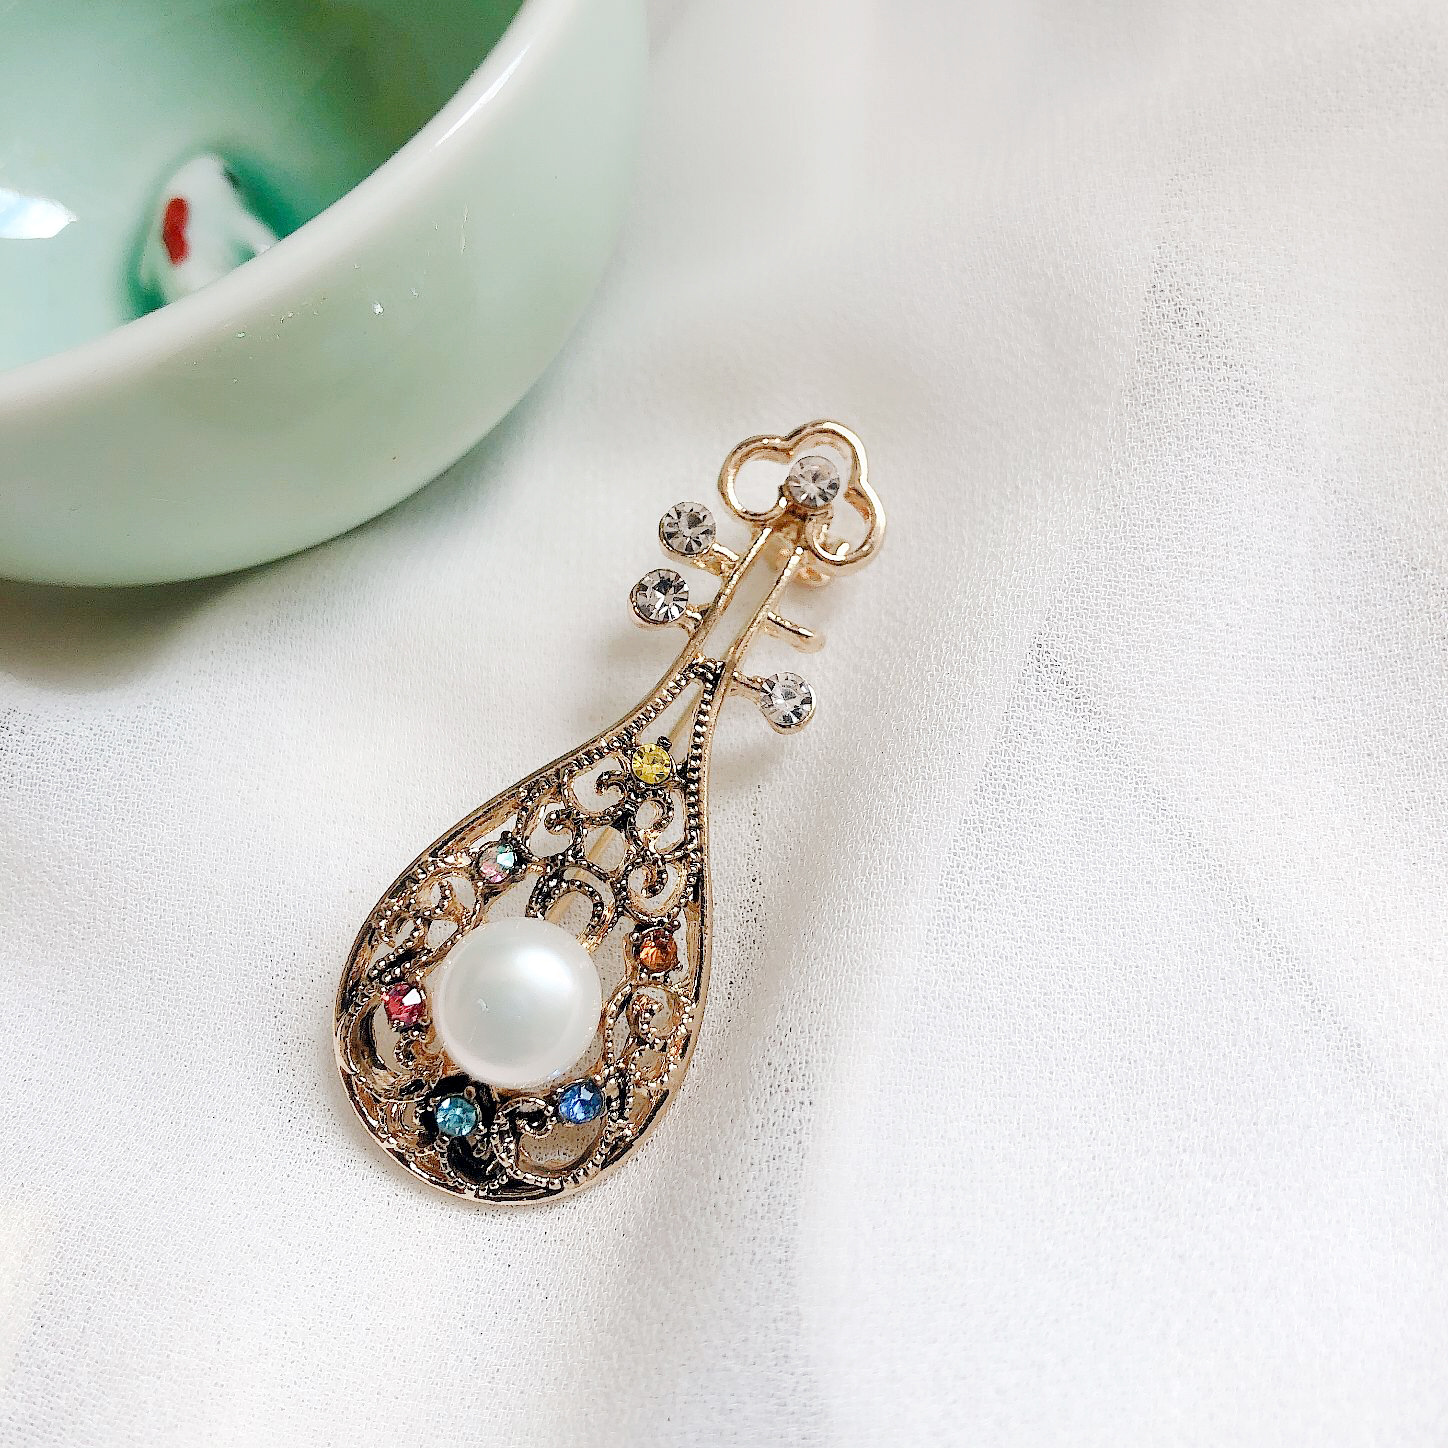 1:white pearl